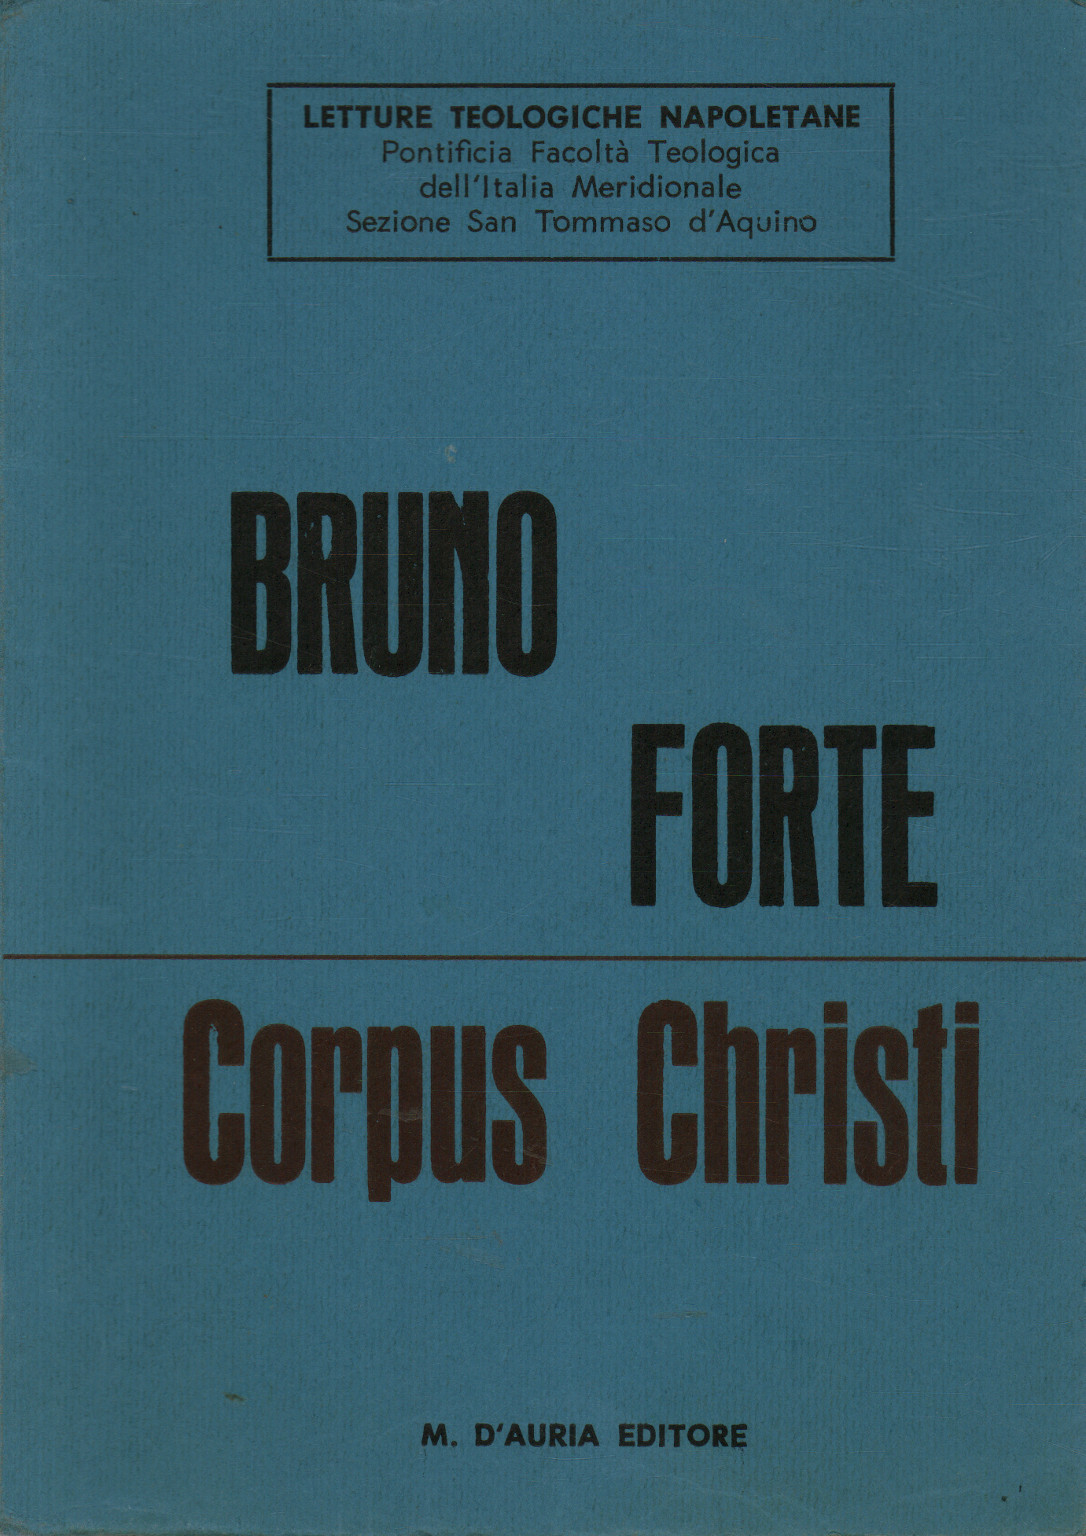 Corpus Christi, Bruno Forte